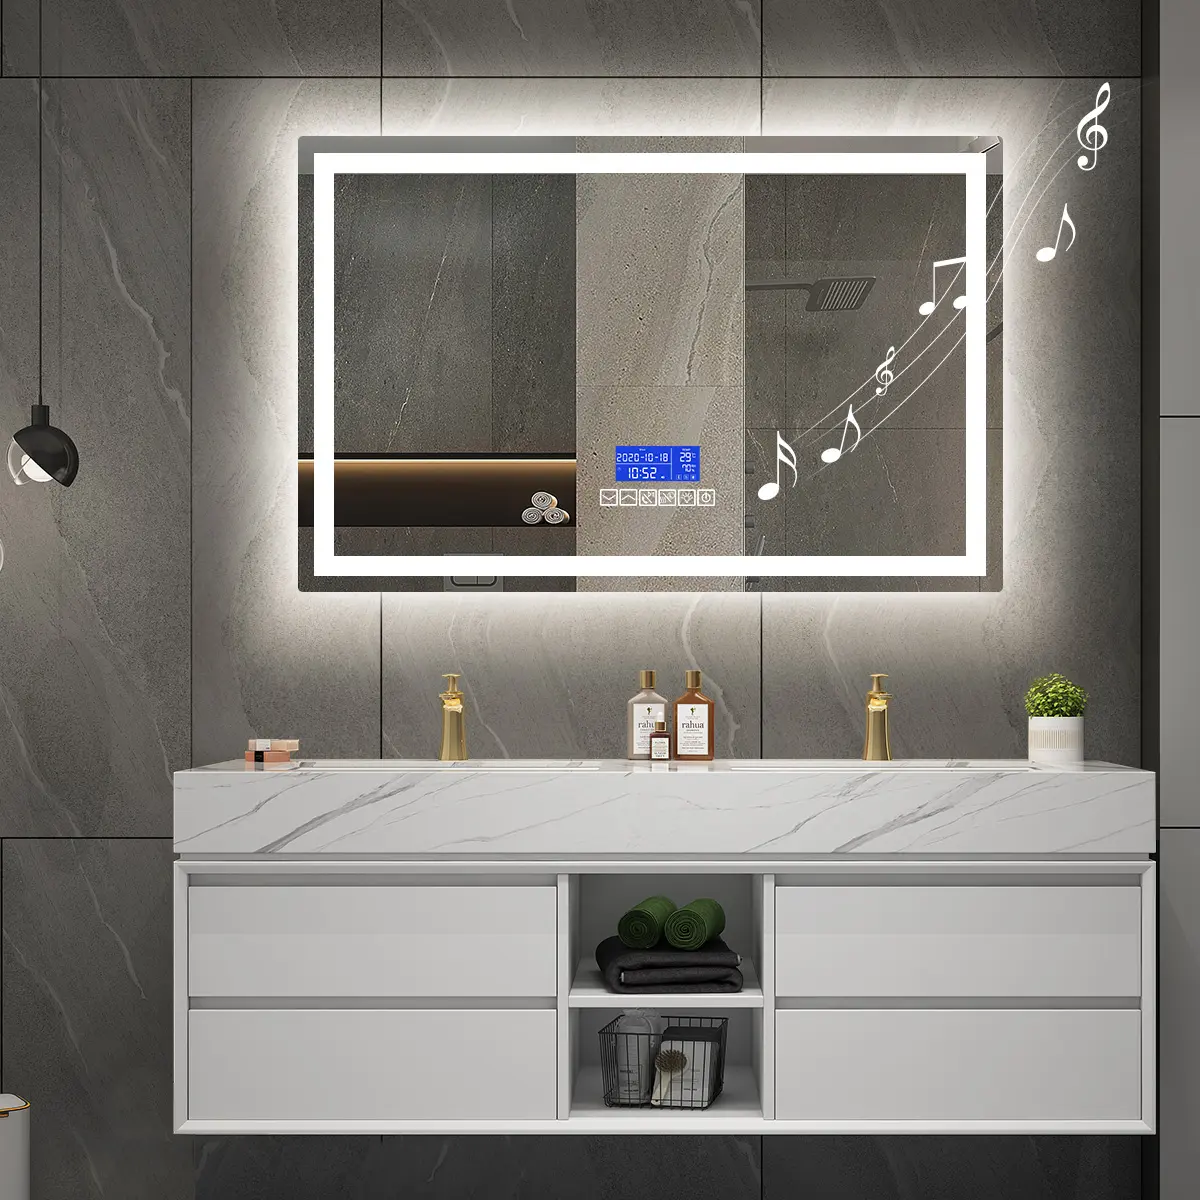 Hot Sales Durable LED Smart Tempered Glass Bathroom Mirror Extended Intelligent Bathroom Vanity Mirror with LED Lights Defogger